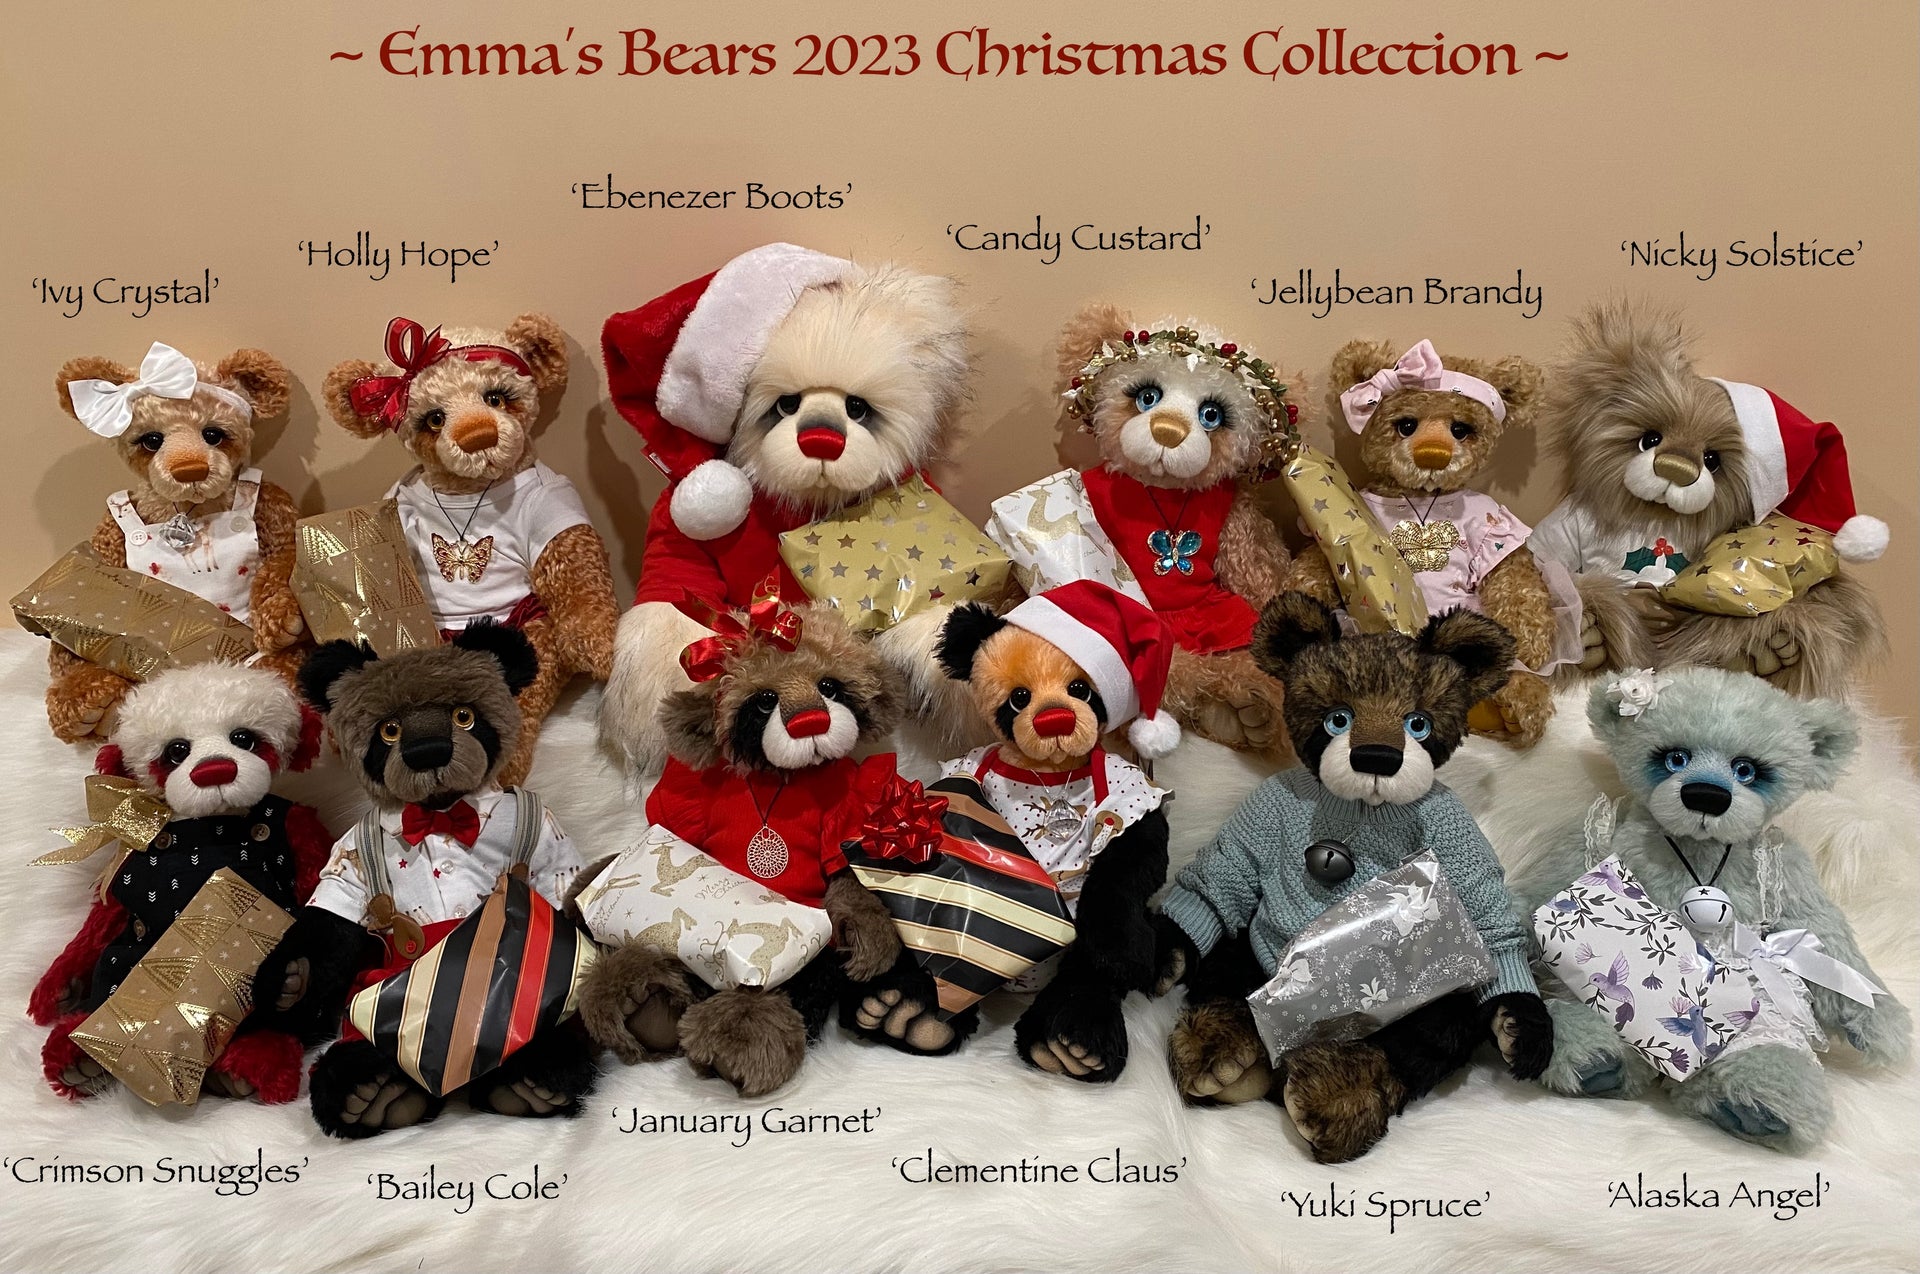 Nicky Solstice - 16" Christmas 2023 Artist Bear by Emma's Bears - OOAK